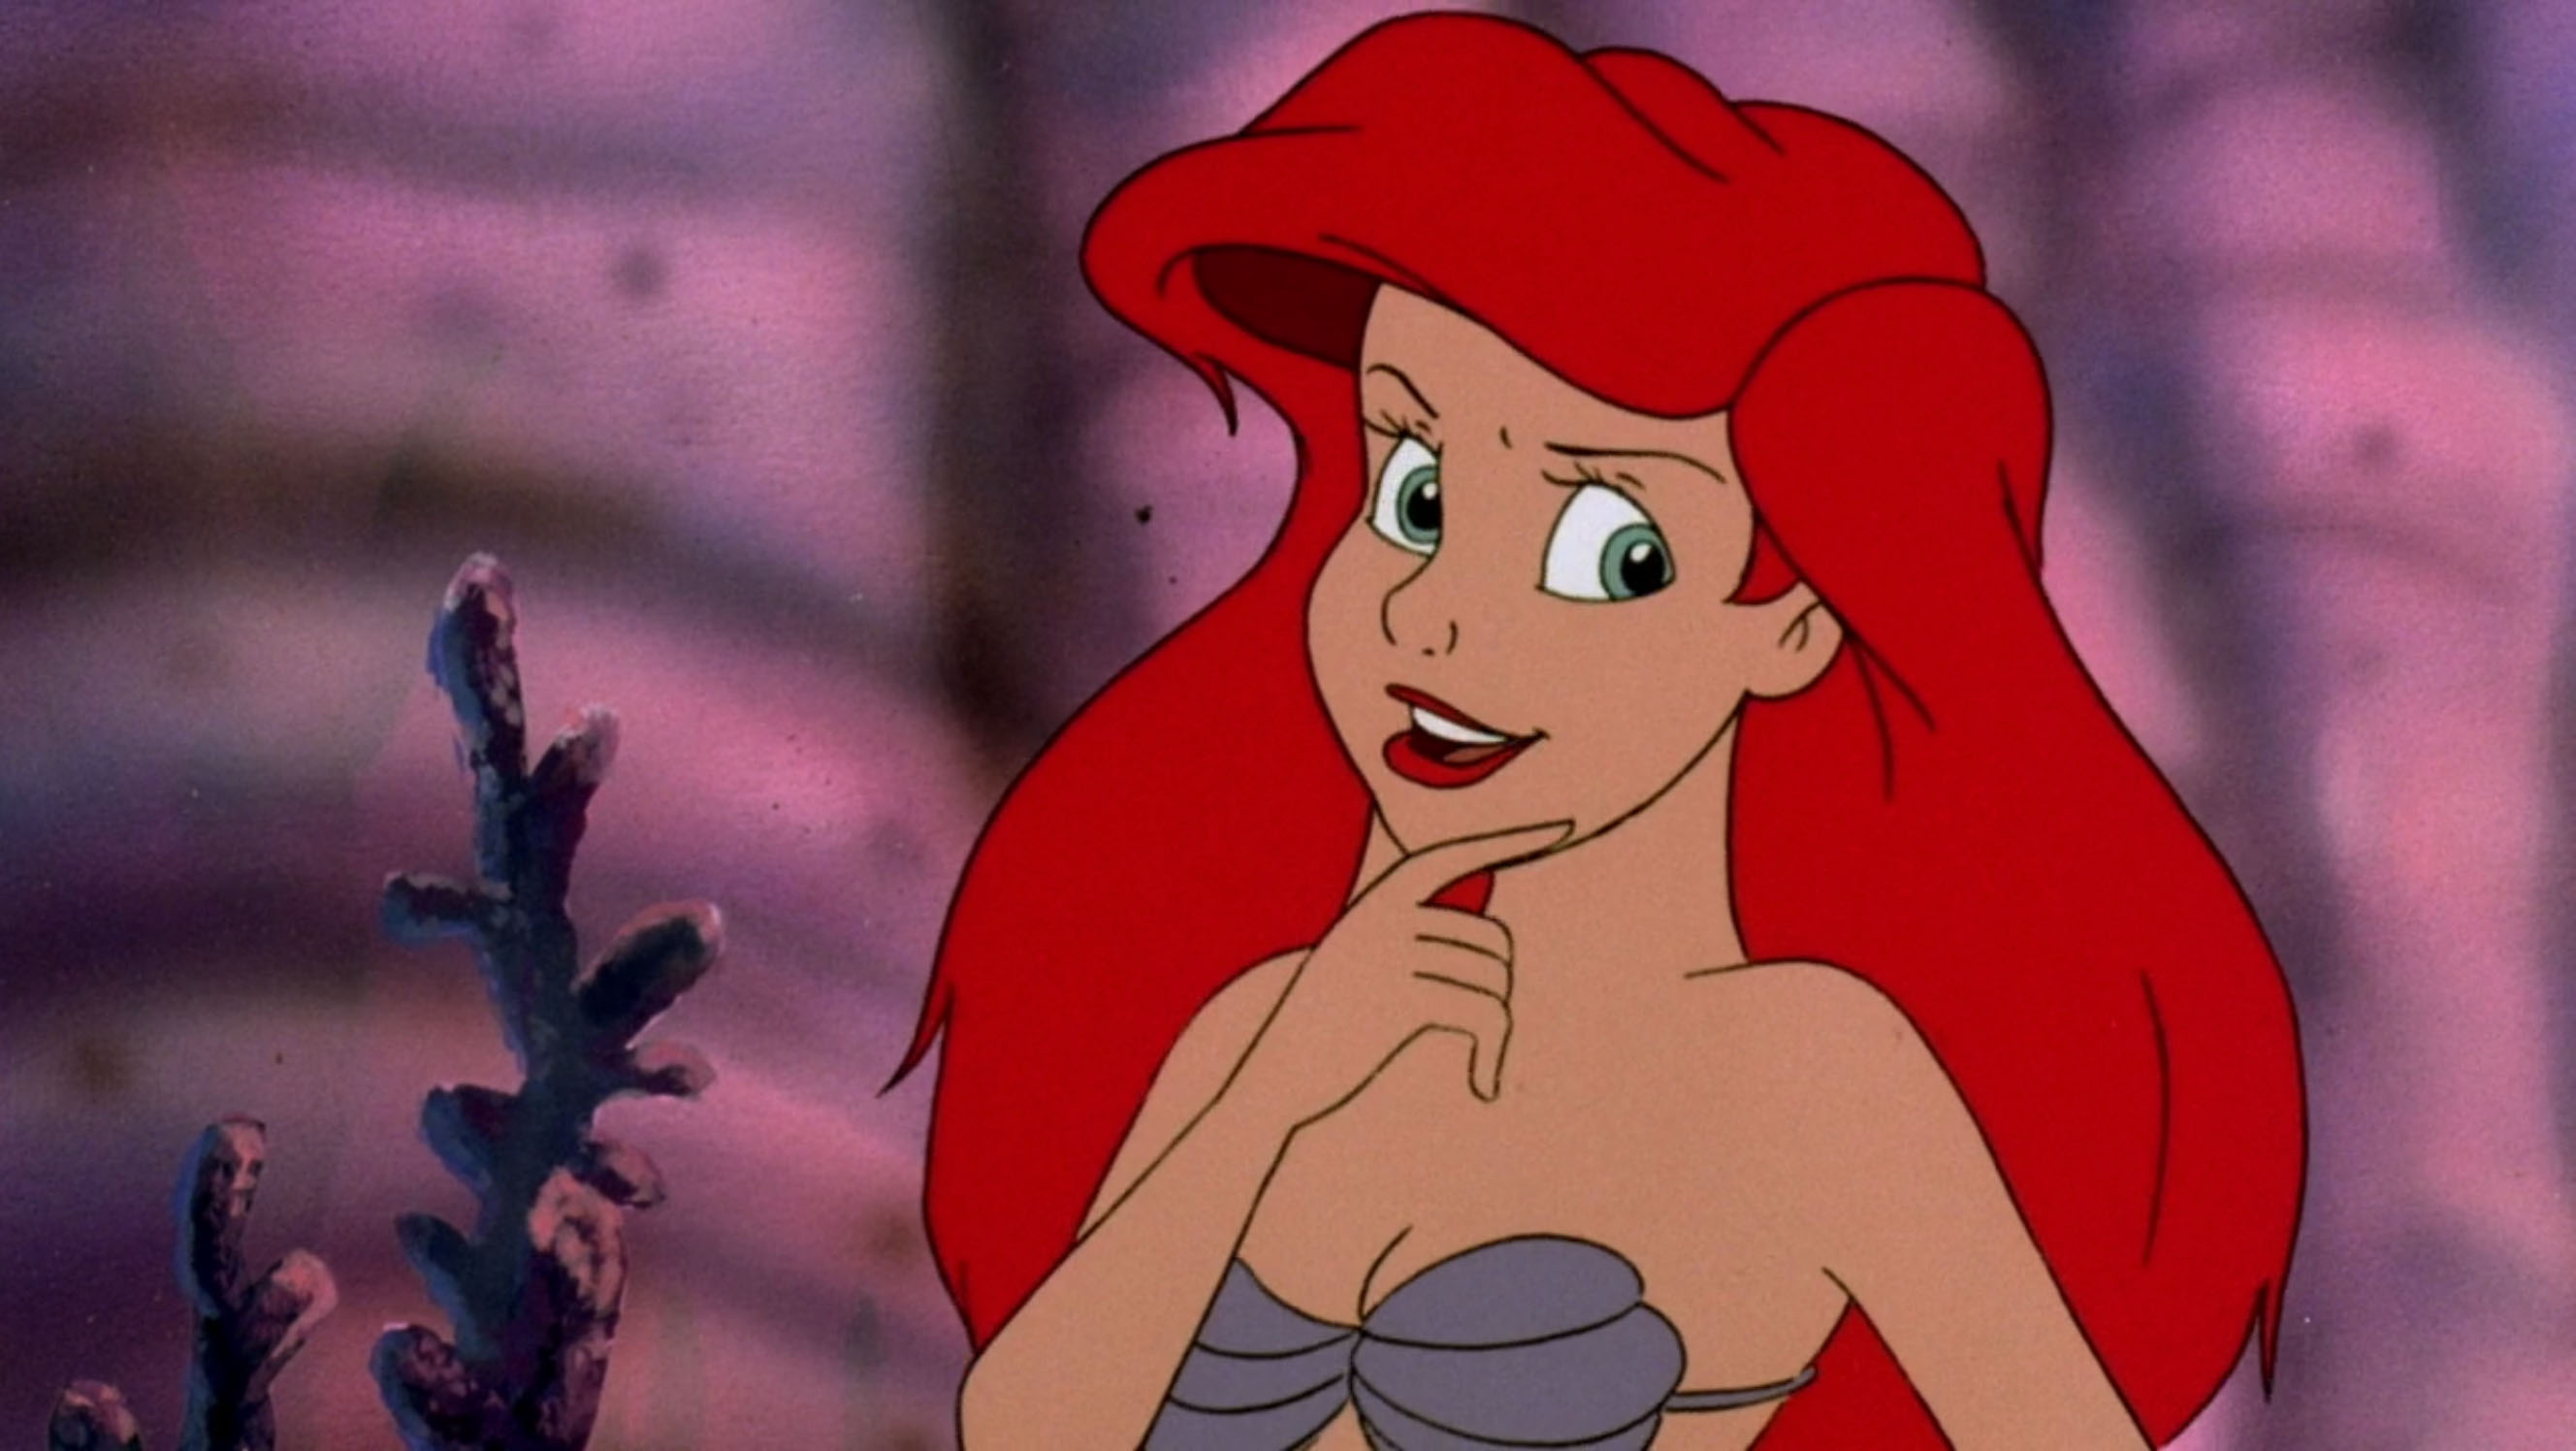 Ariel  Disney little mermaids, Disney princess ariel, Ariel the little  mermaid